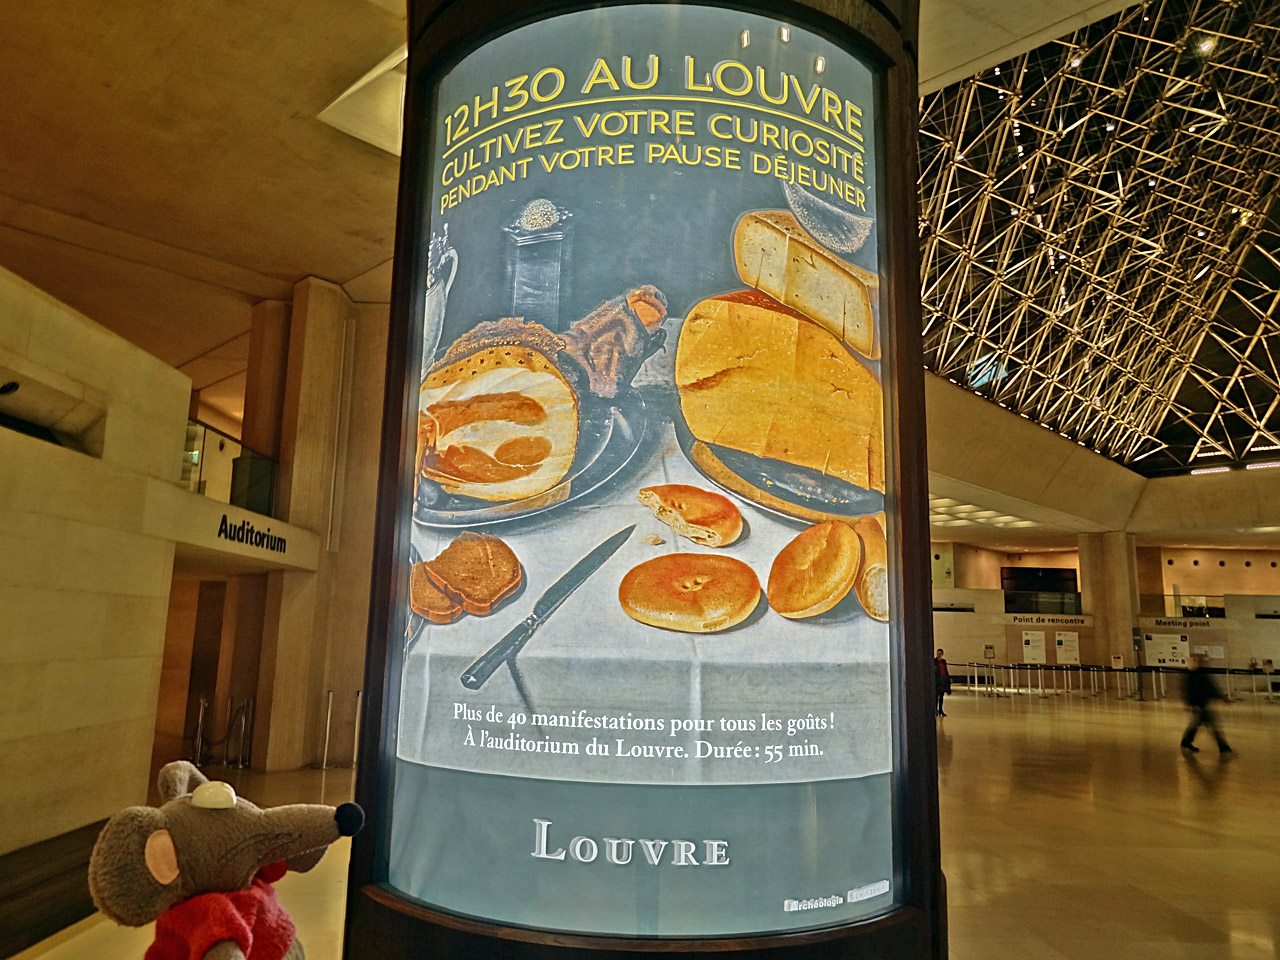 Au Louvre on cultive sa curiosité !